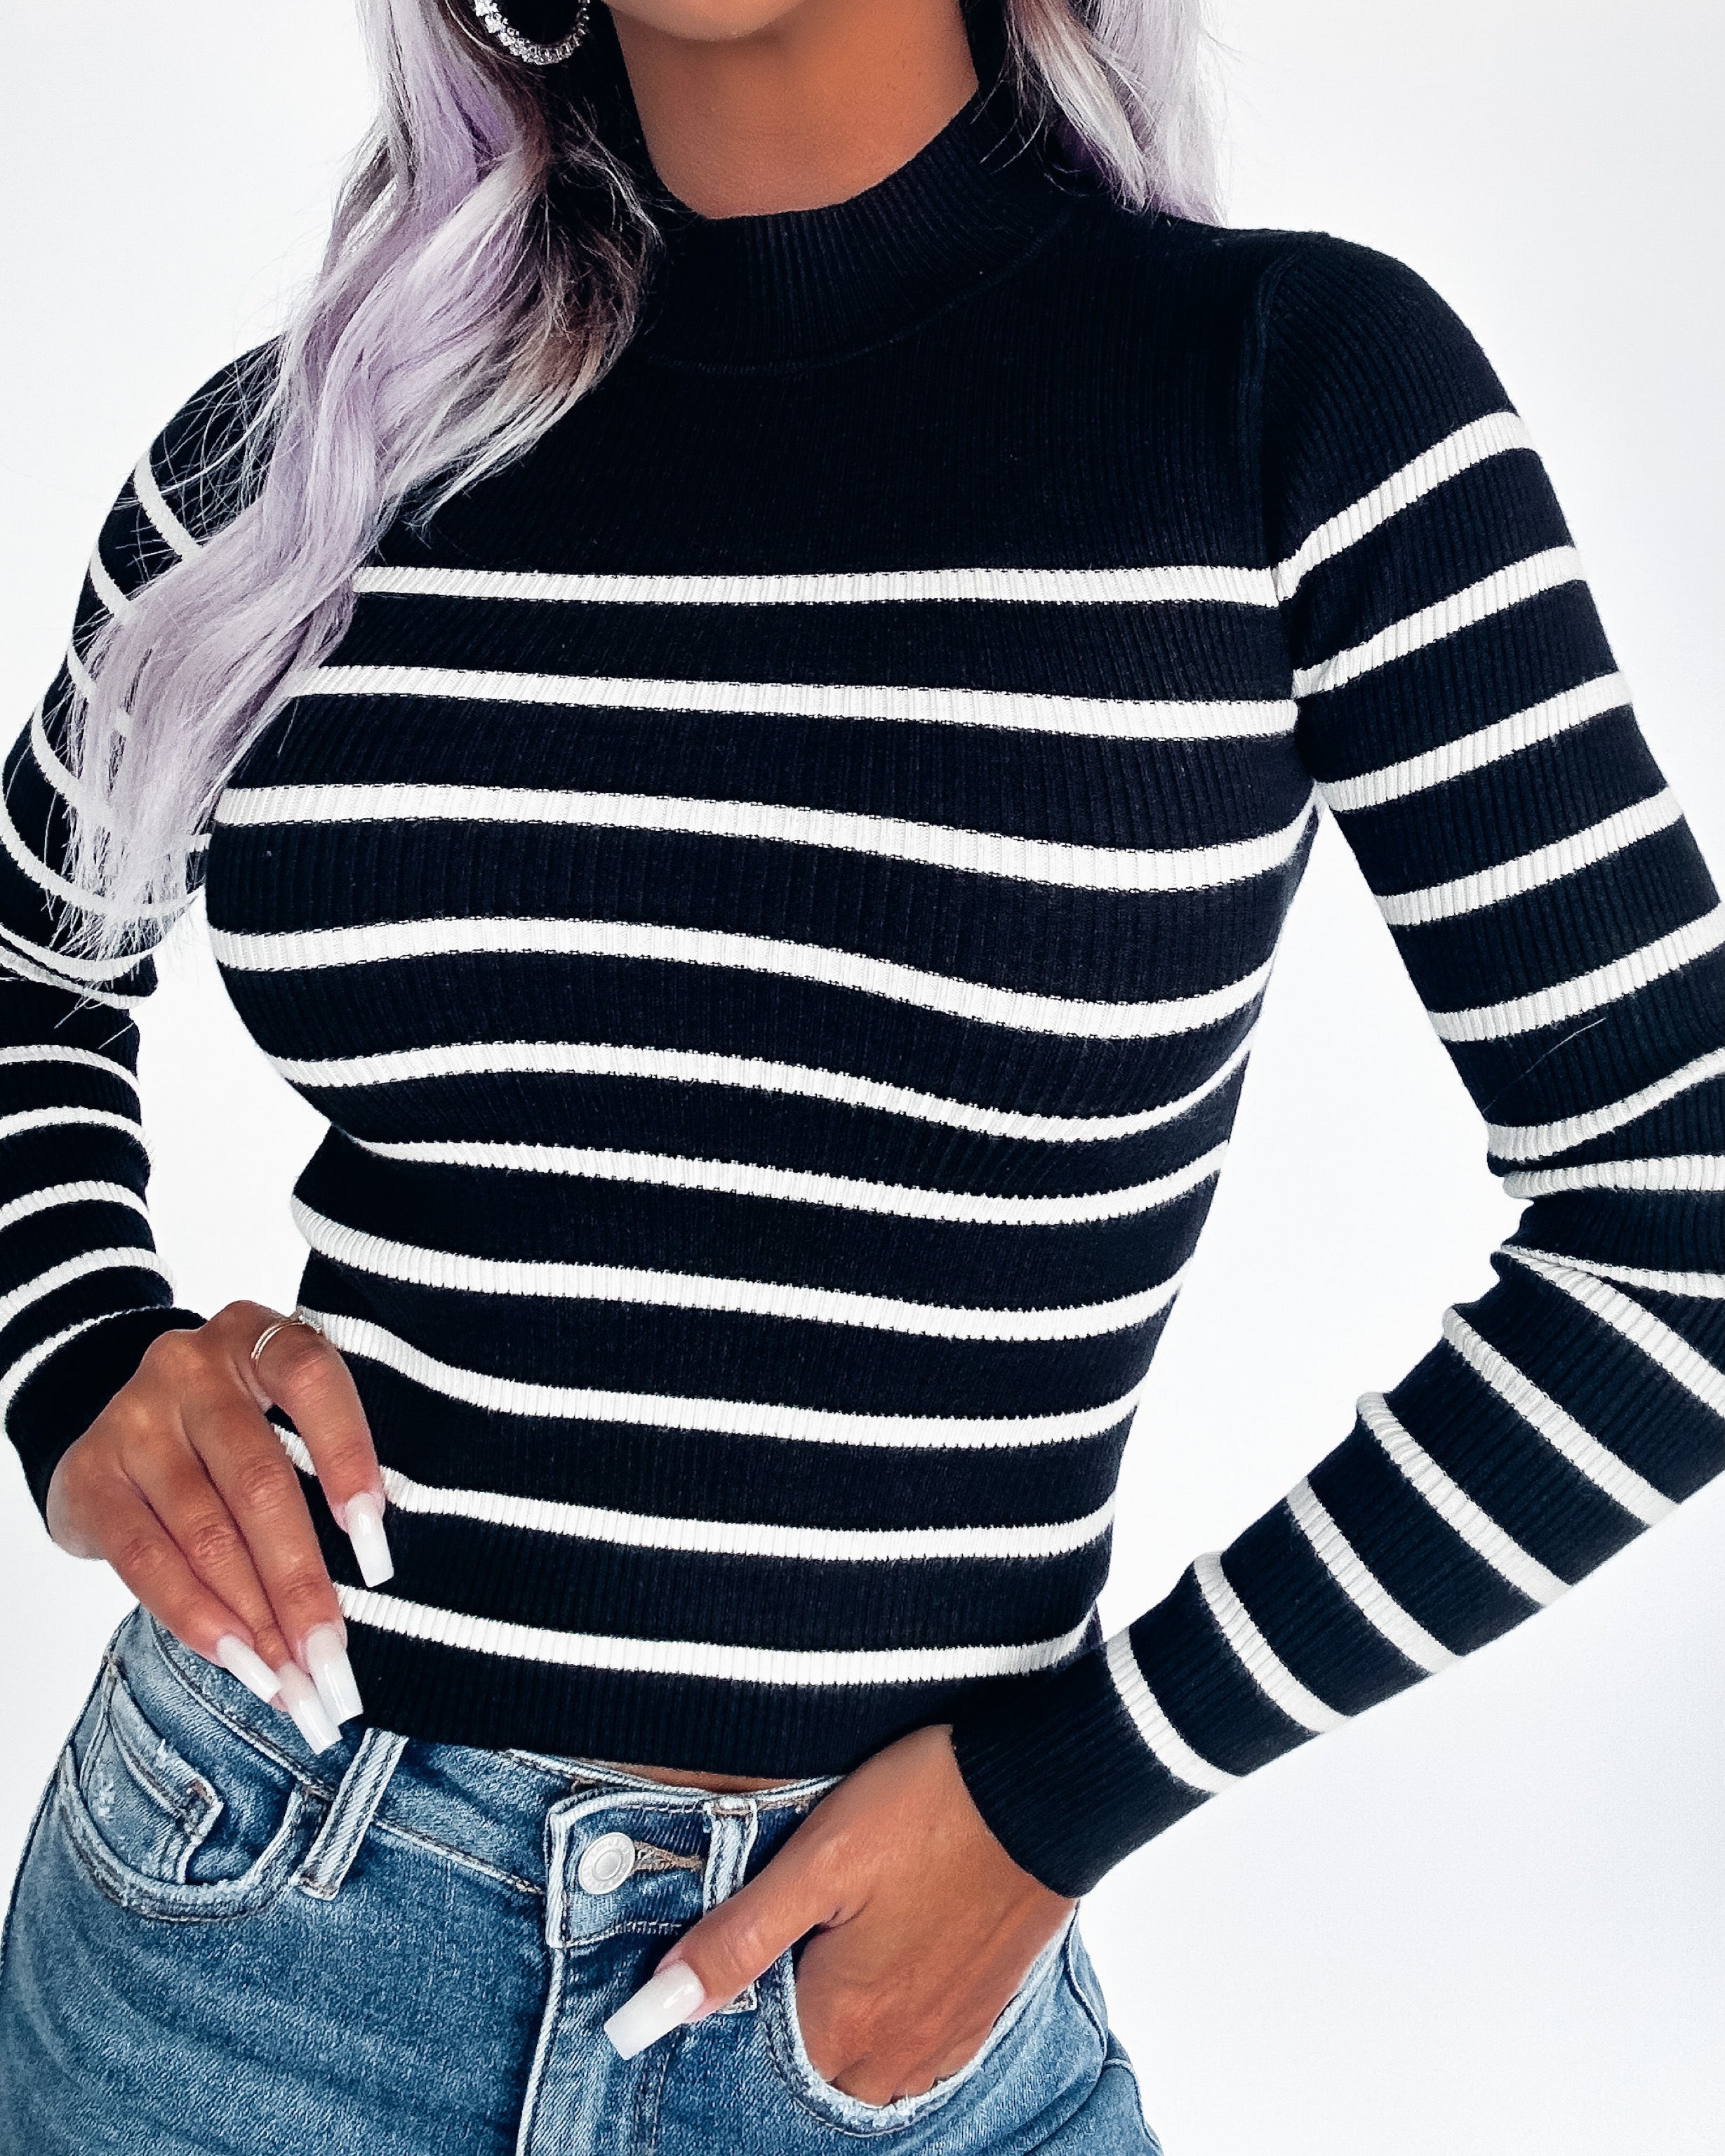 Serenity Striped Sweater- Black